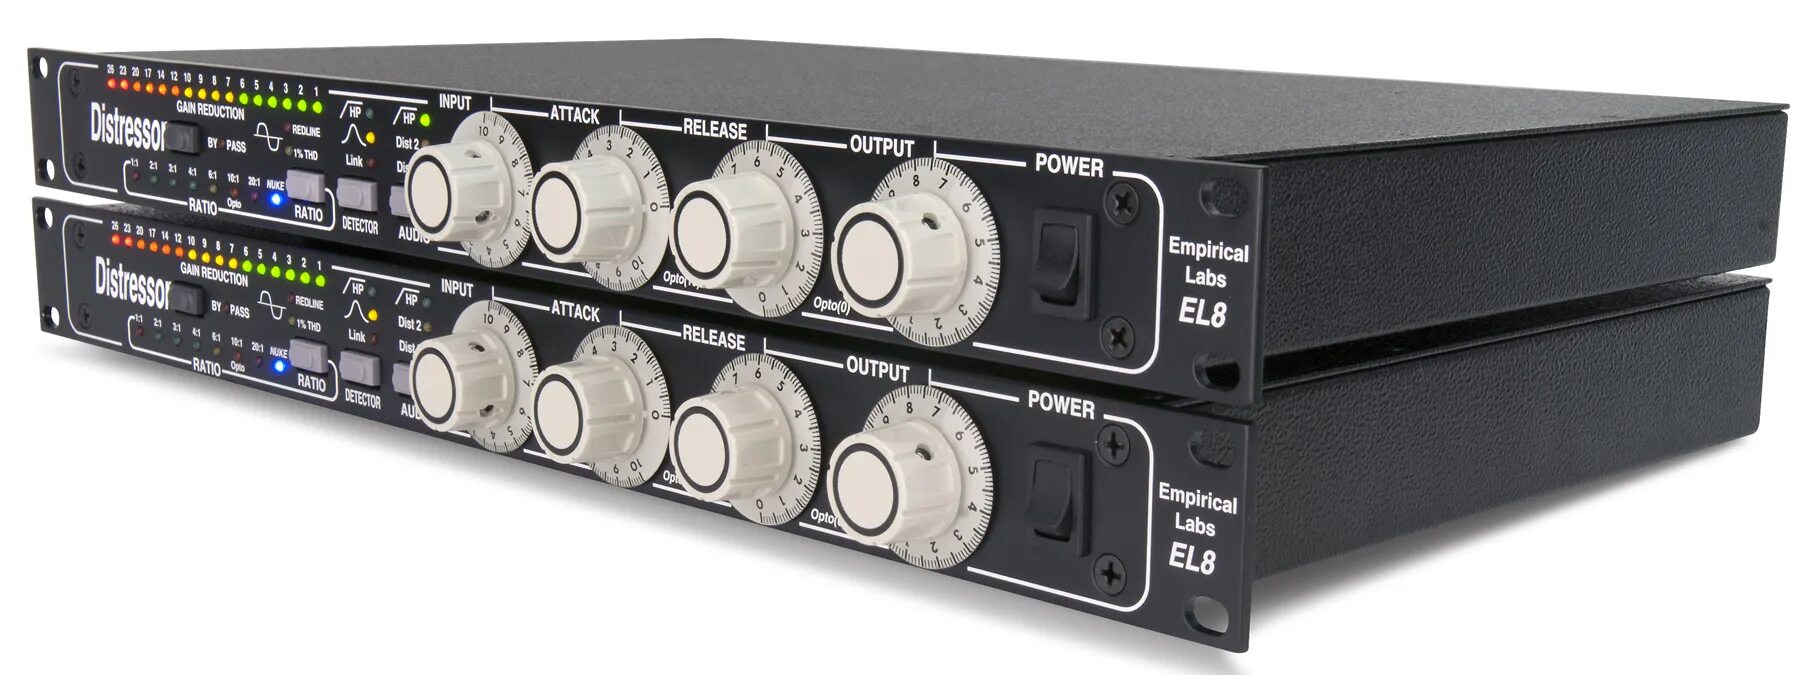 Power released. Empirical Labs el8x Distressor. Distressor Compressor. Universal Audio empirical Labs Distressor. Знаменитый компрессор Distressor.